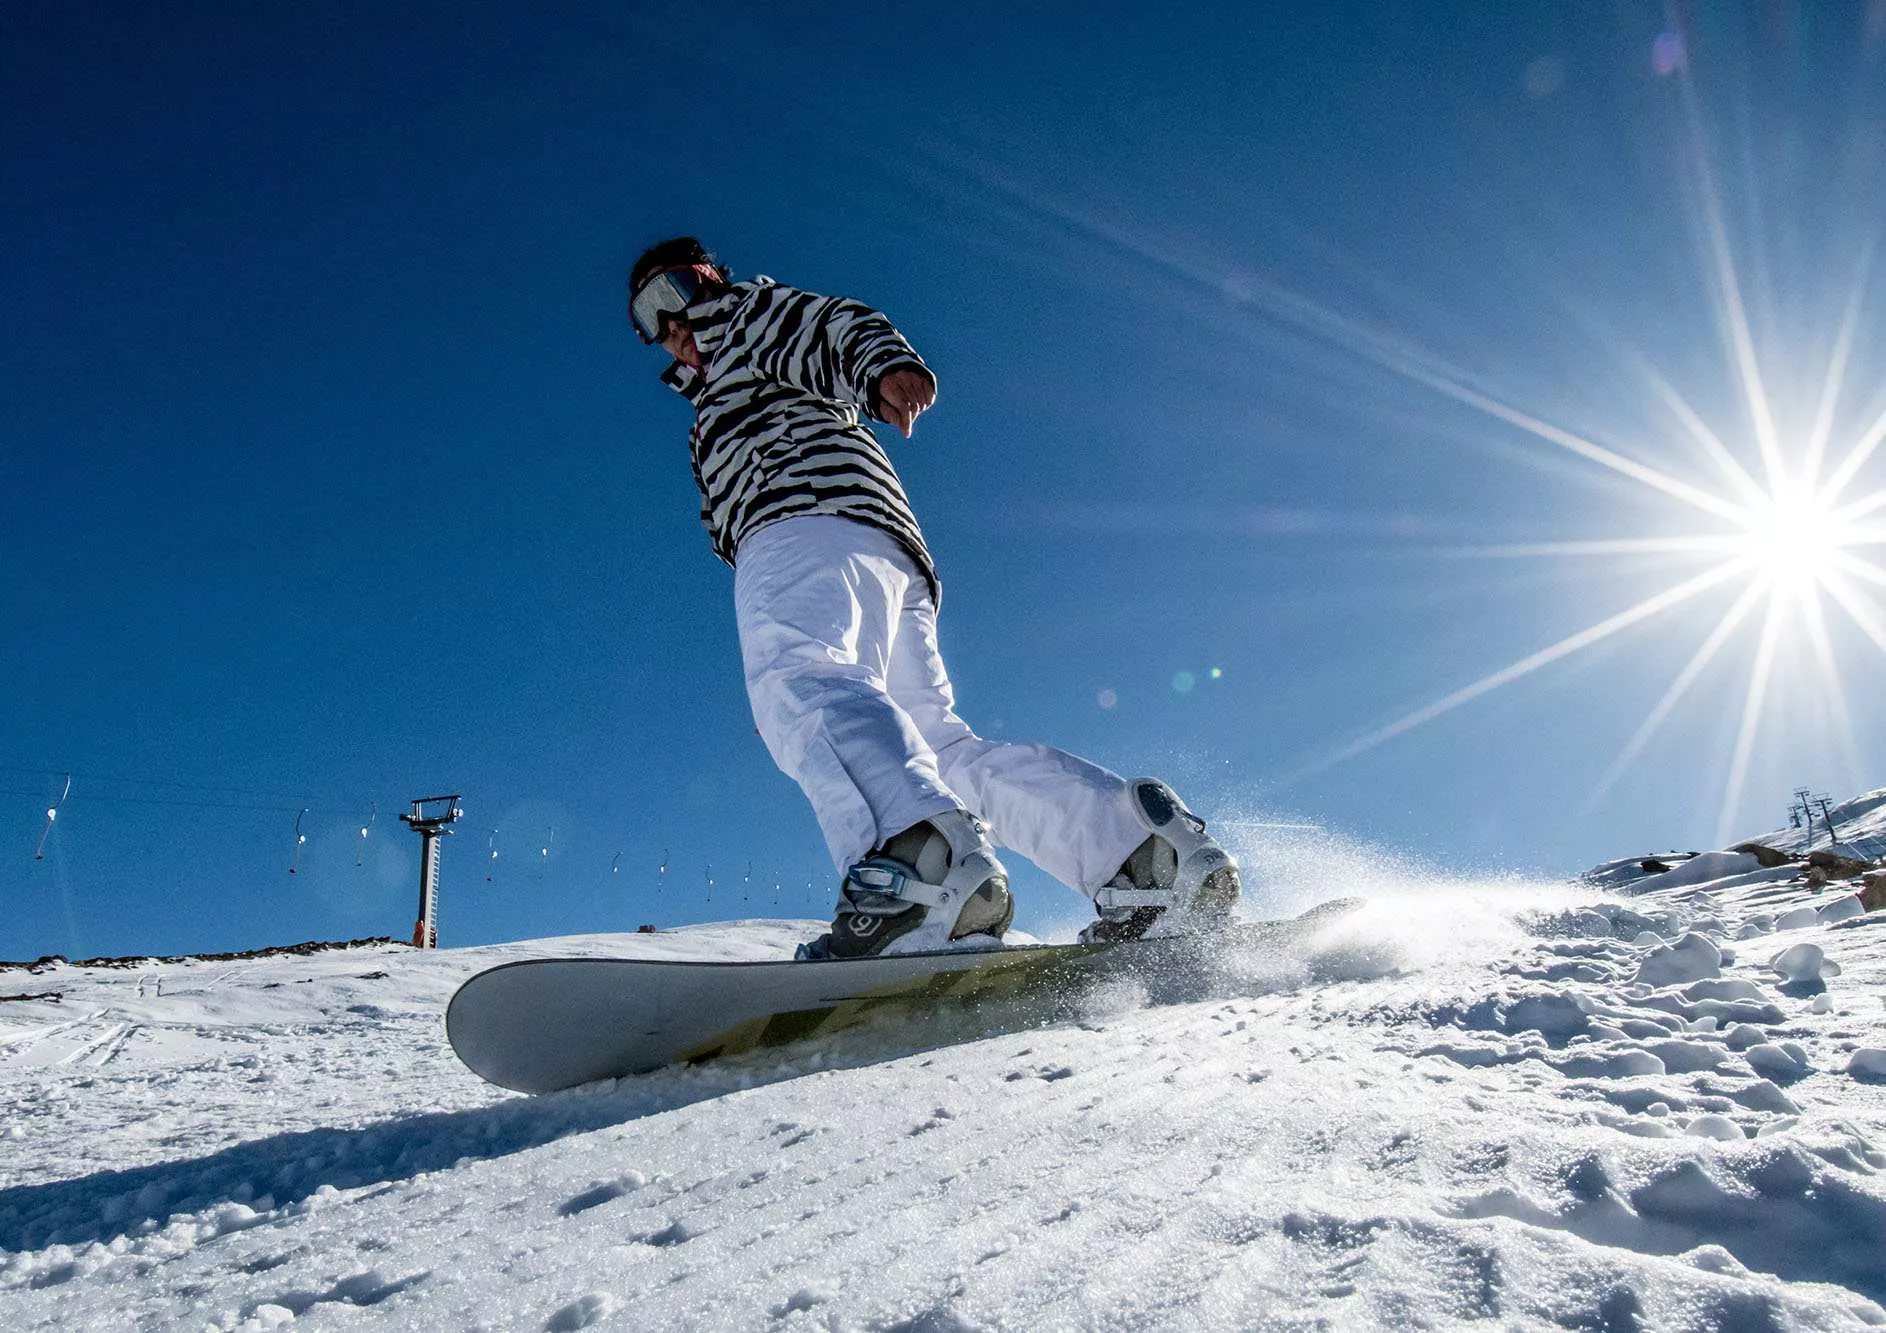 Anilio Ski Center in Greece, Europe | Snowboarding,Skiing,Skating - Rated 4